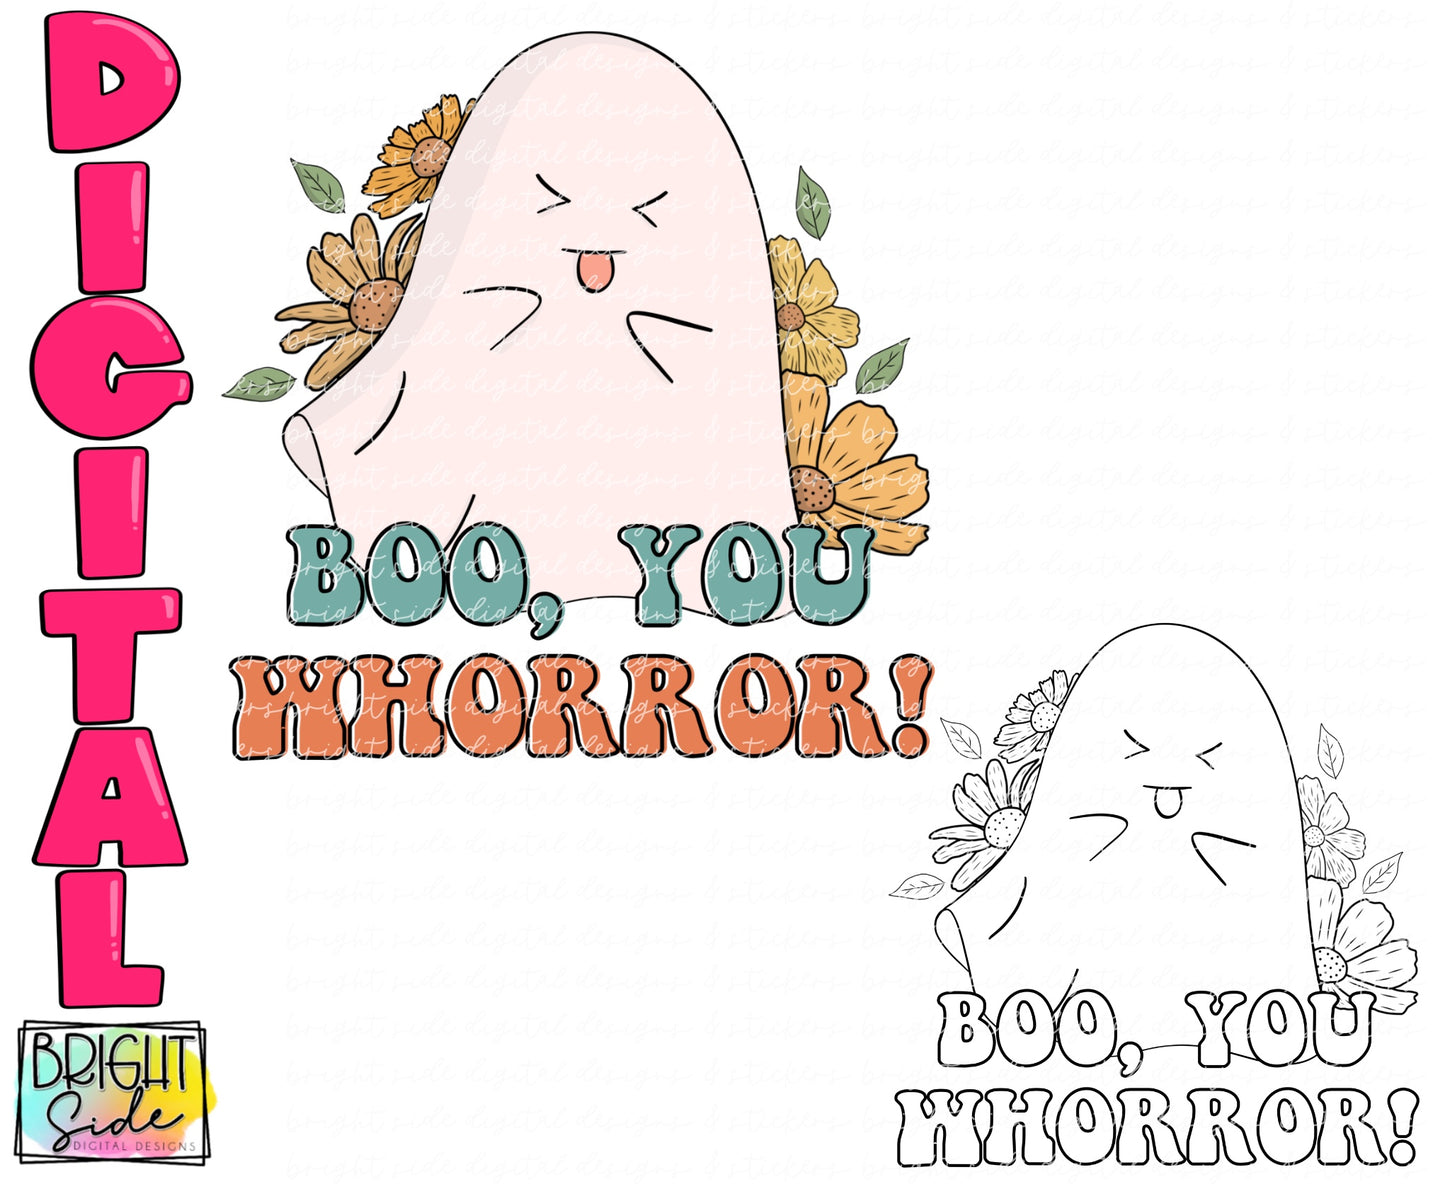 Boo, you whorror!